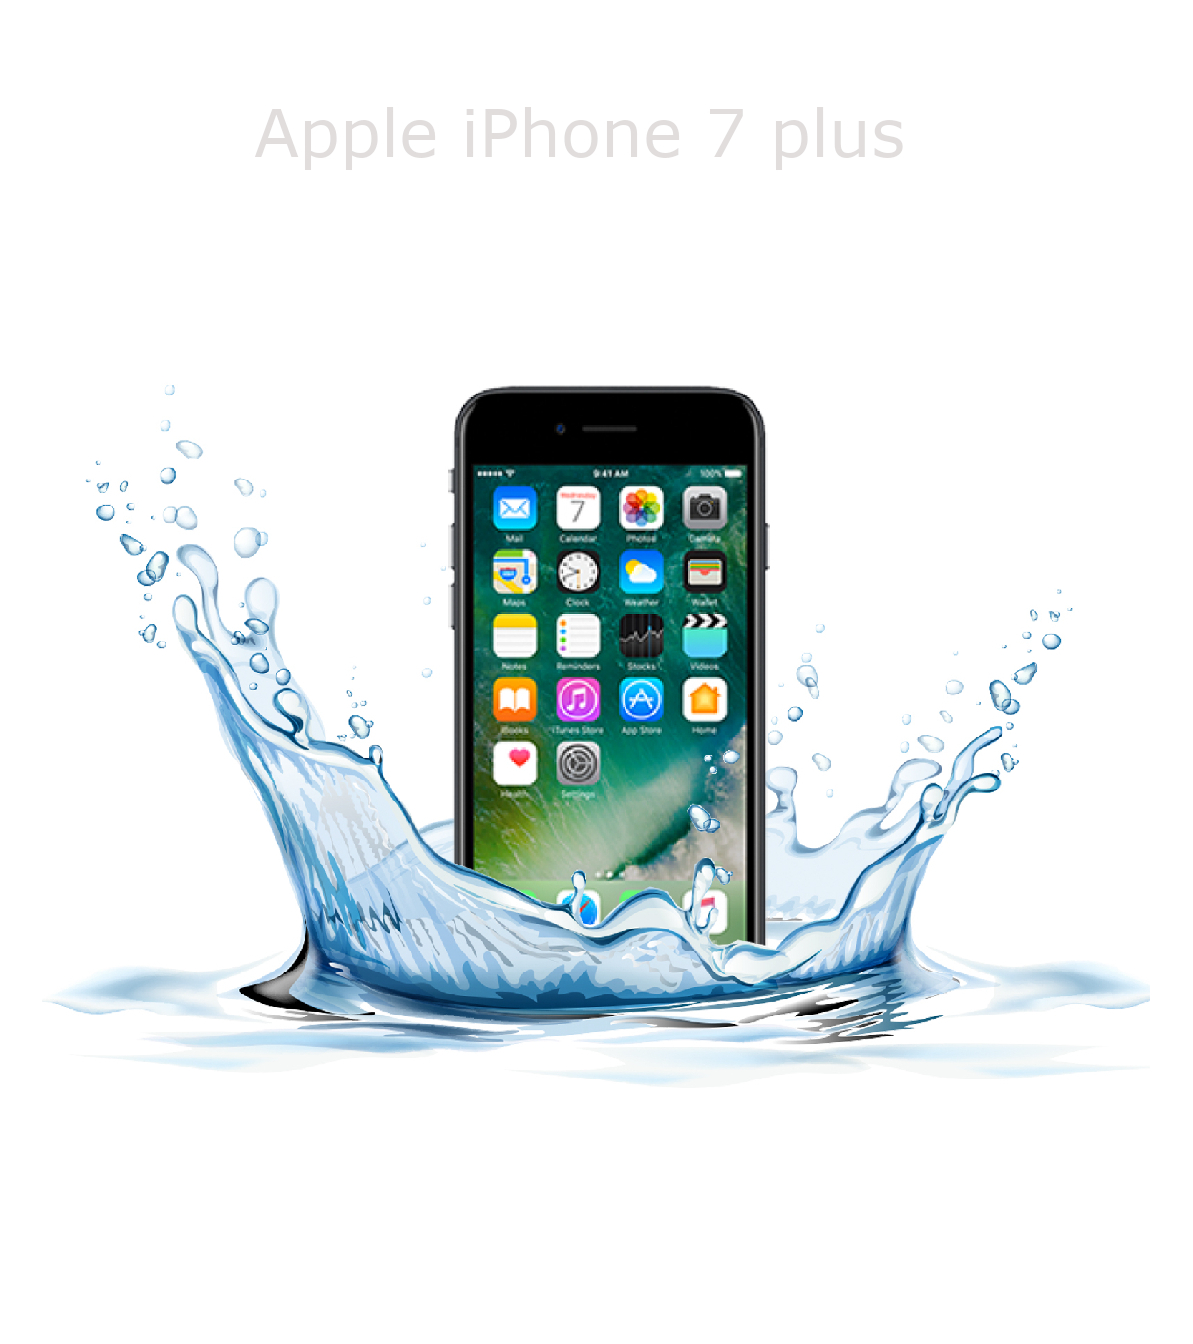 Laga fukt/vattenskadad iPhone 7 plus